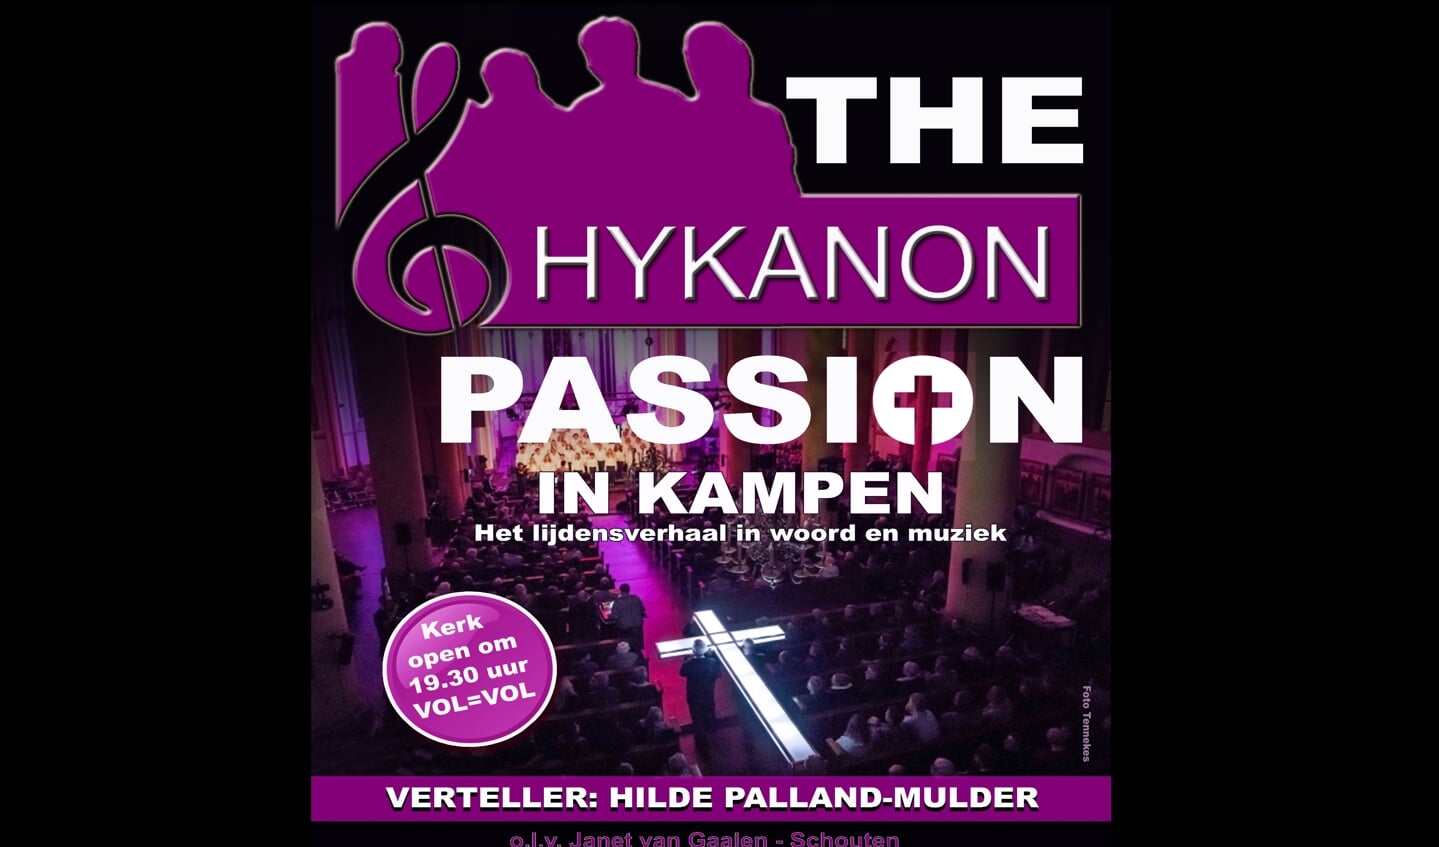 The HYKANON Passion